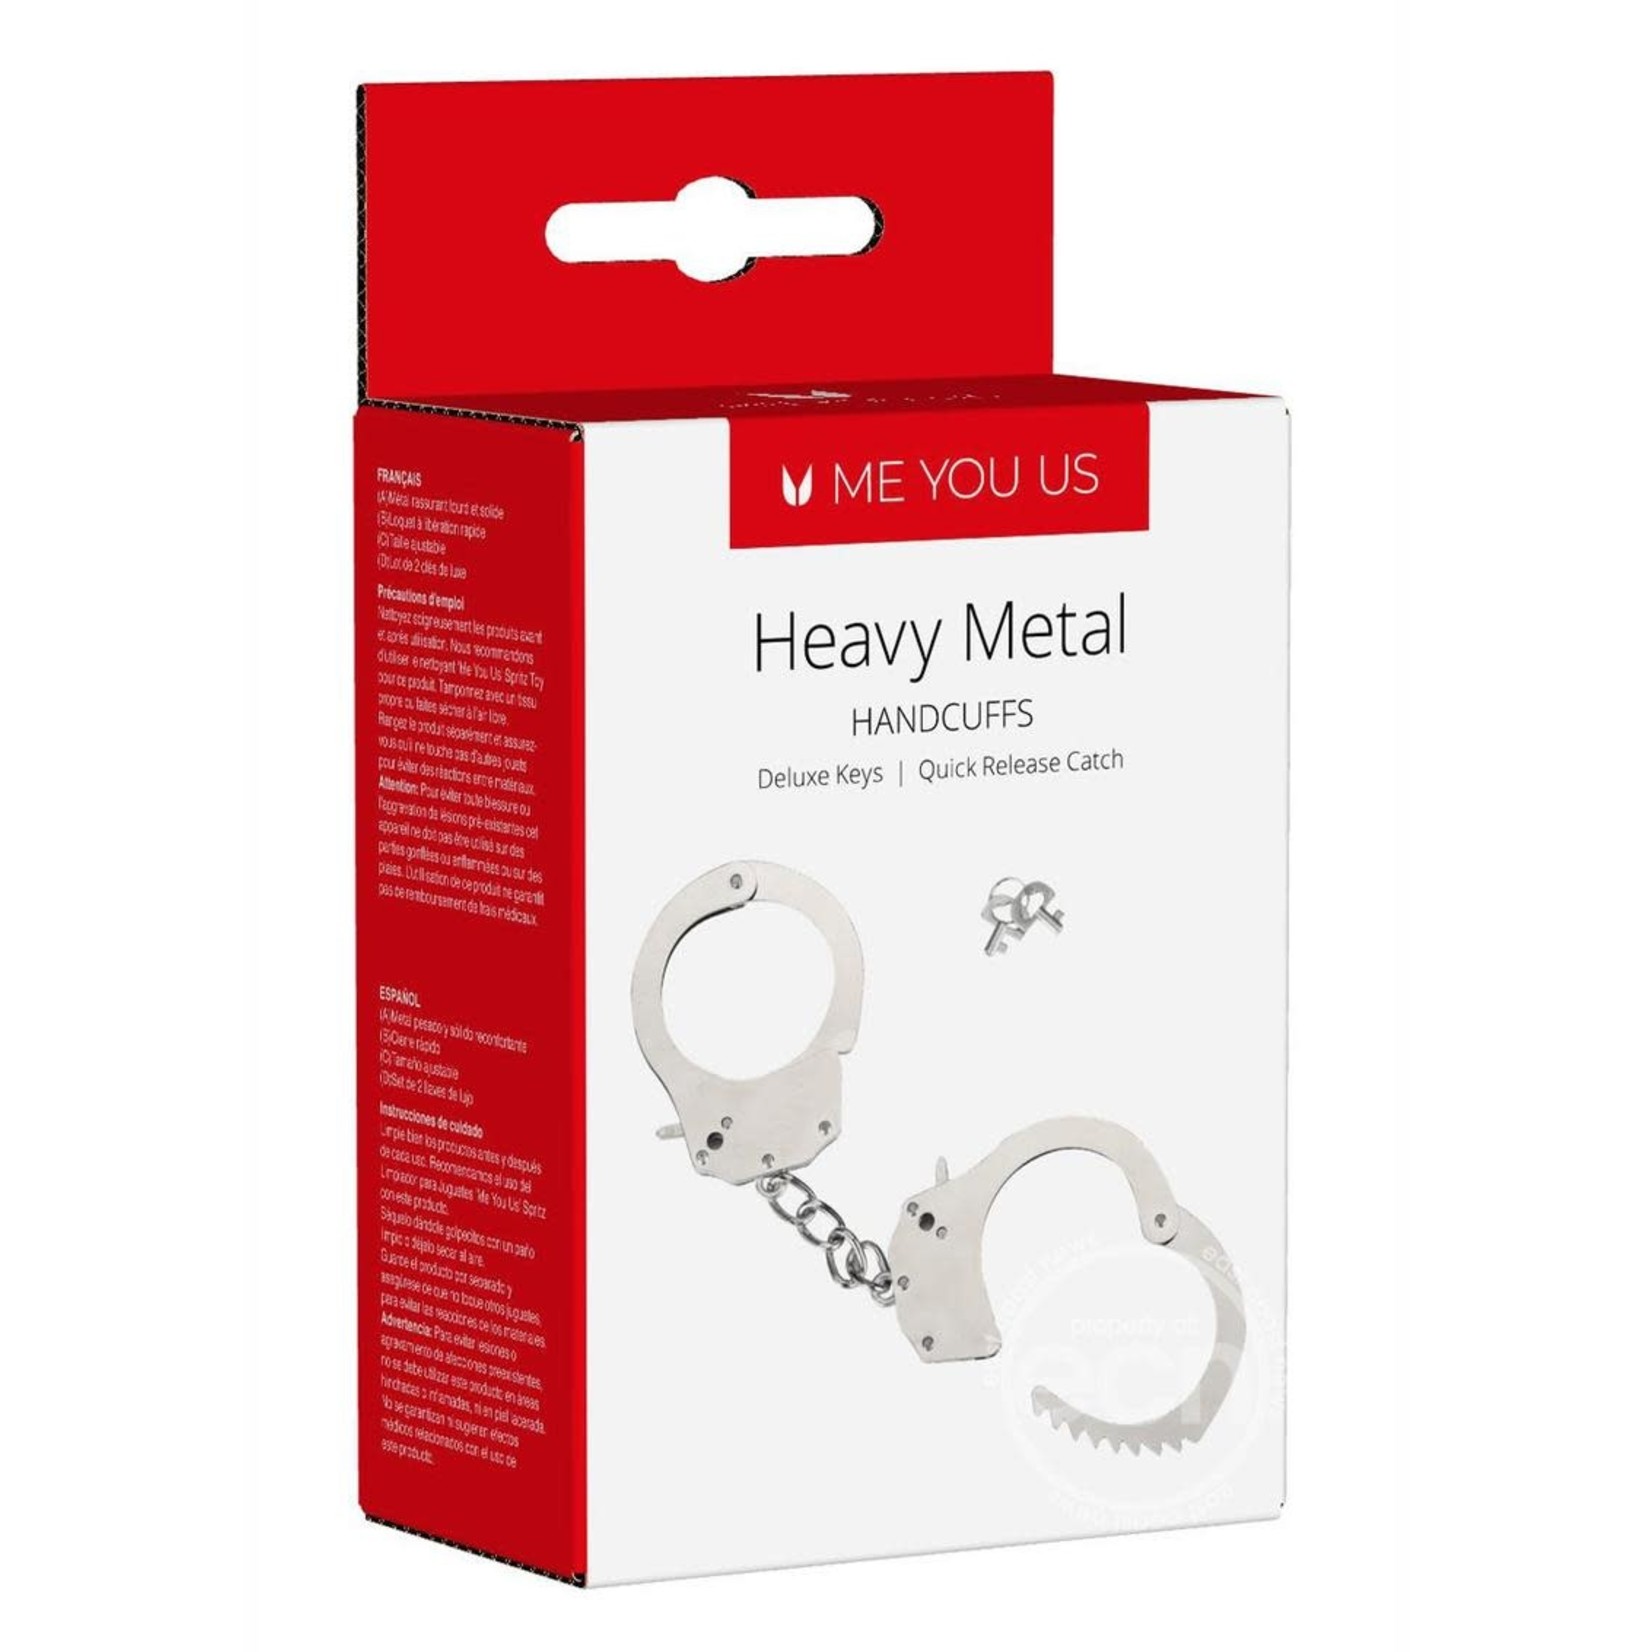 Kinx Heavy Metal Handcuffs - Silver